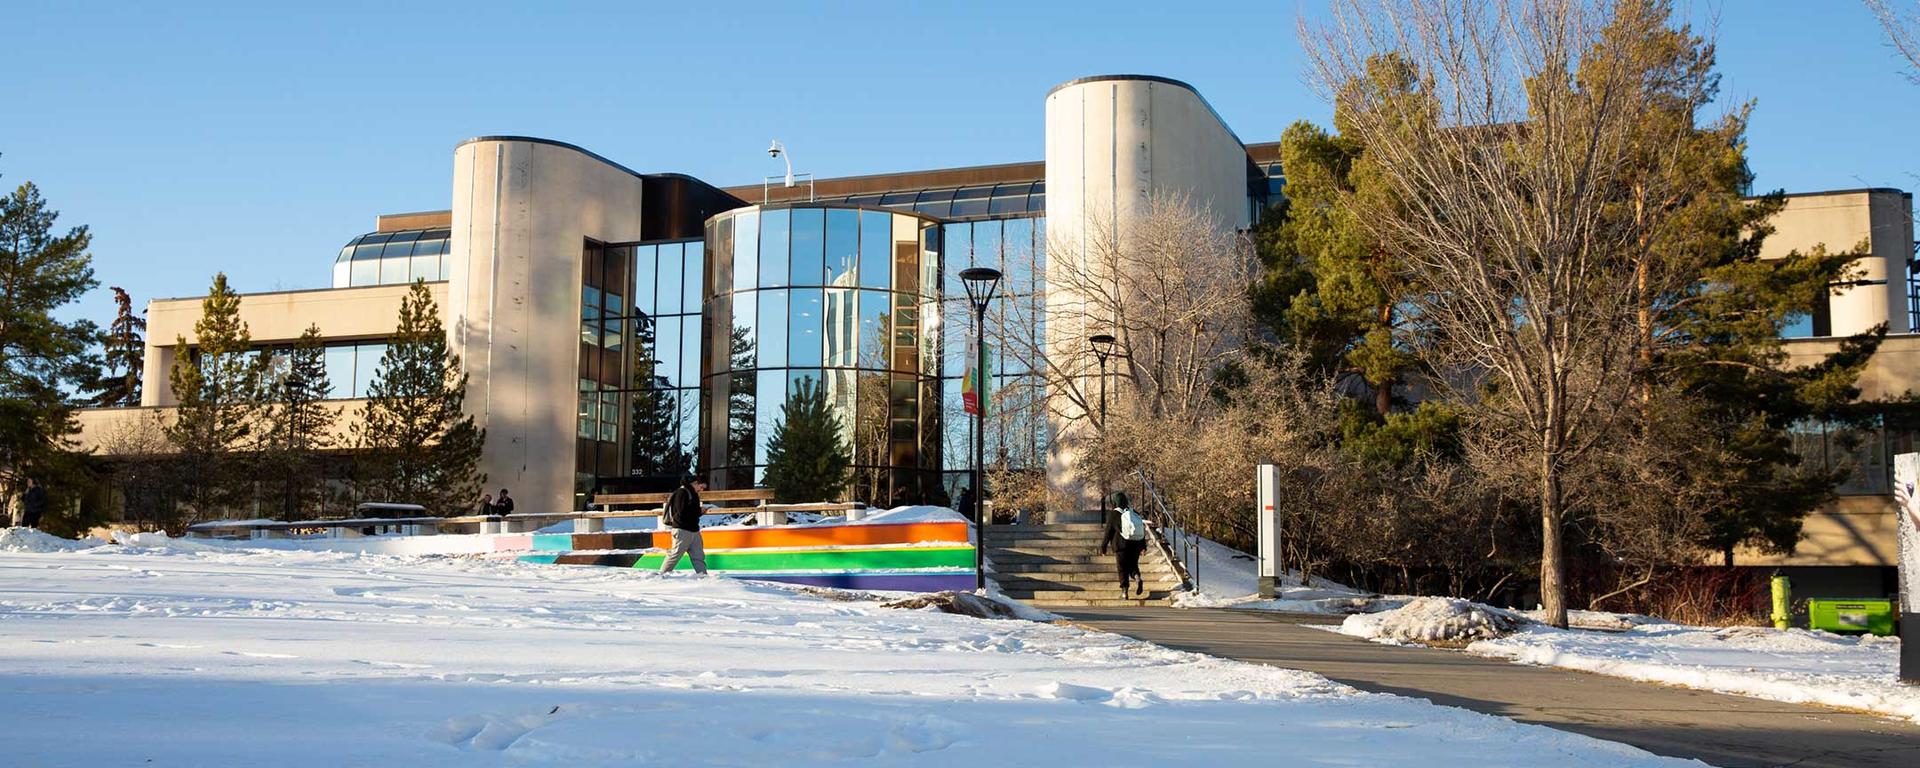 University of Calgary MacEwan Hall building in winter